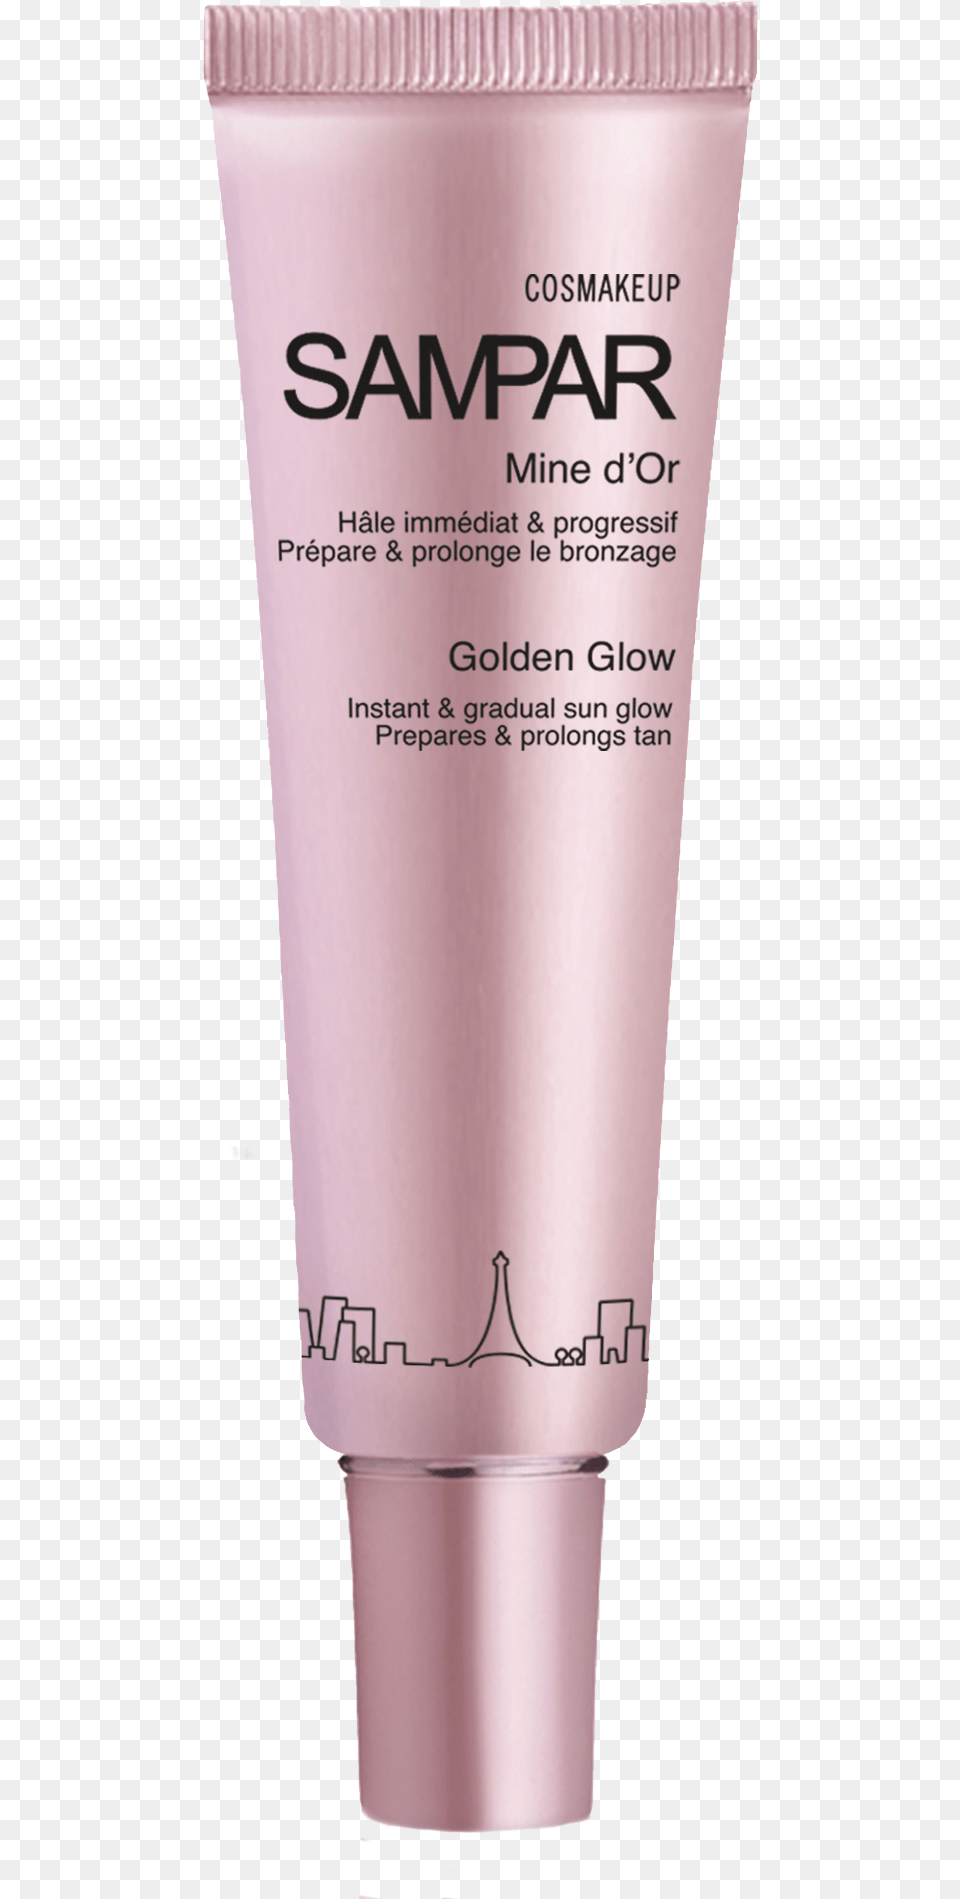 Sampar Golden Glow, Bottle, Lotion, Cosmetics Png Image